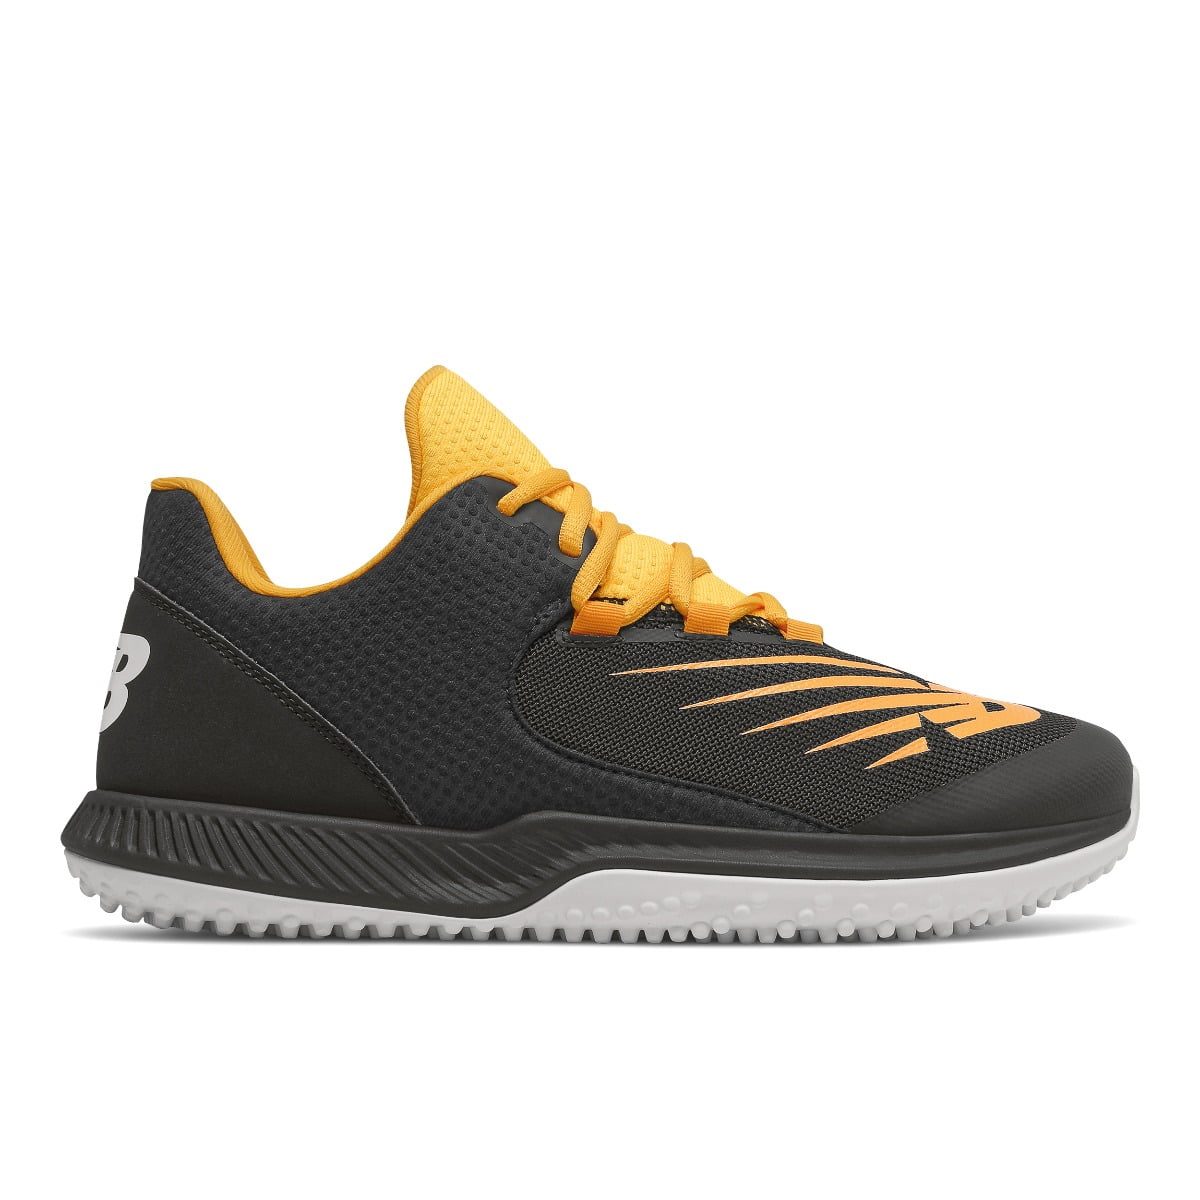 New Balance Men's Fuel Cell 4040V6 Turf Baseball Shoes Black/Orange D 8.5  8.5 D US/Black